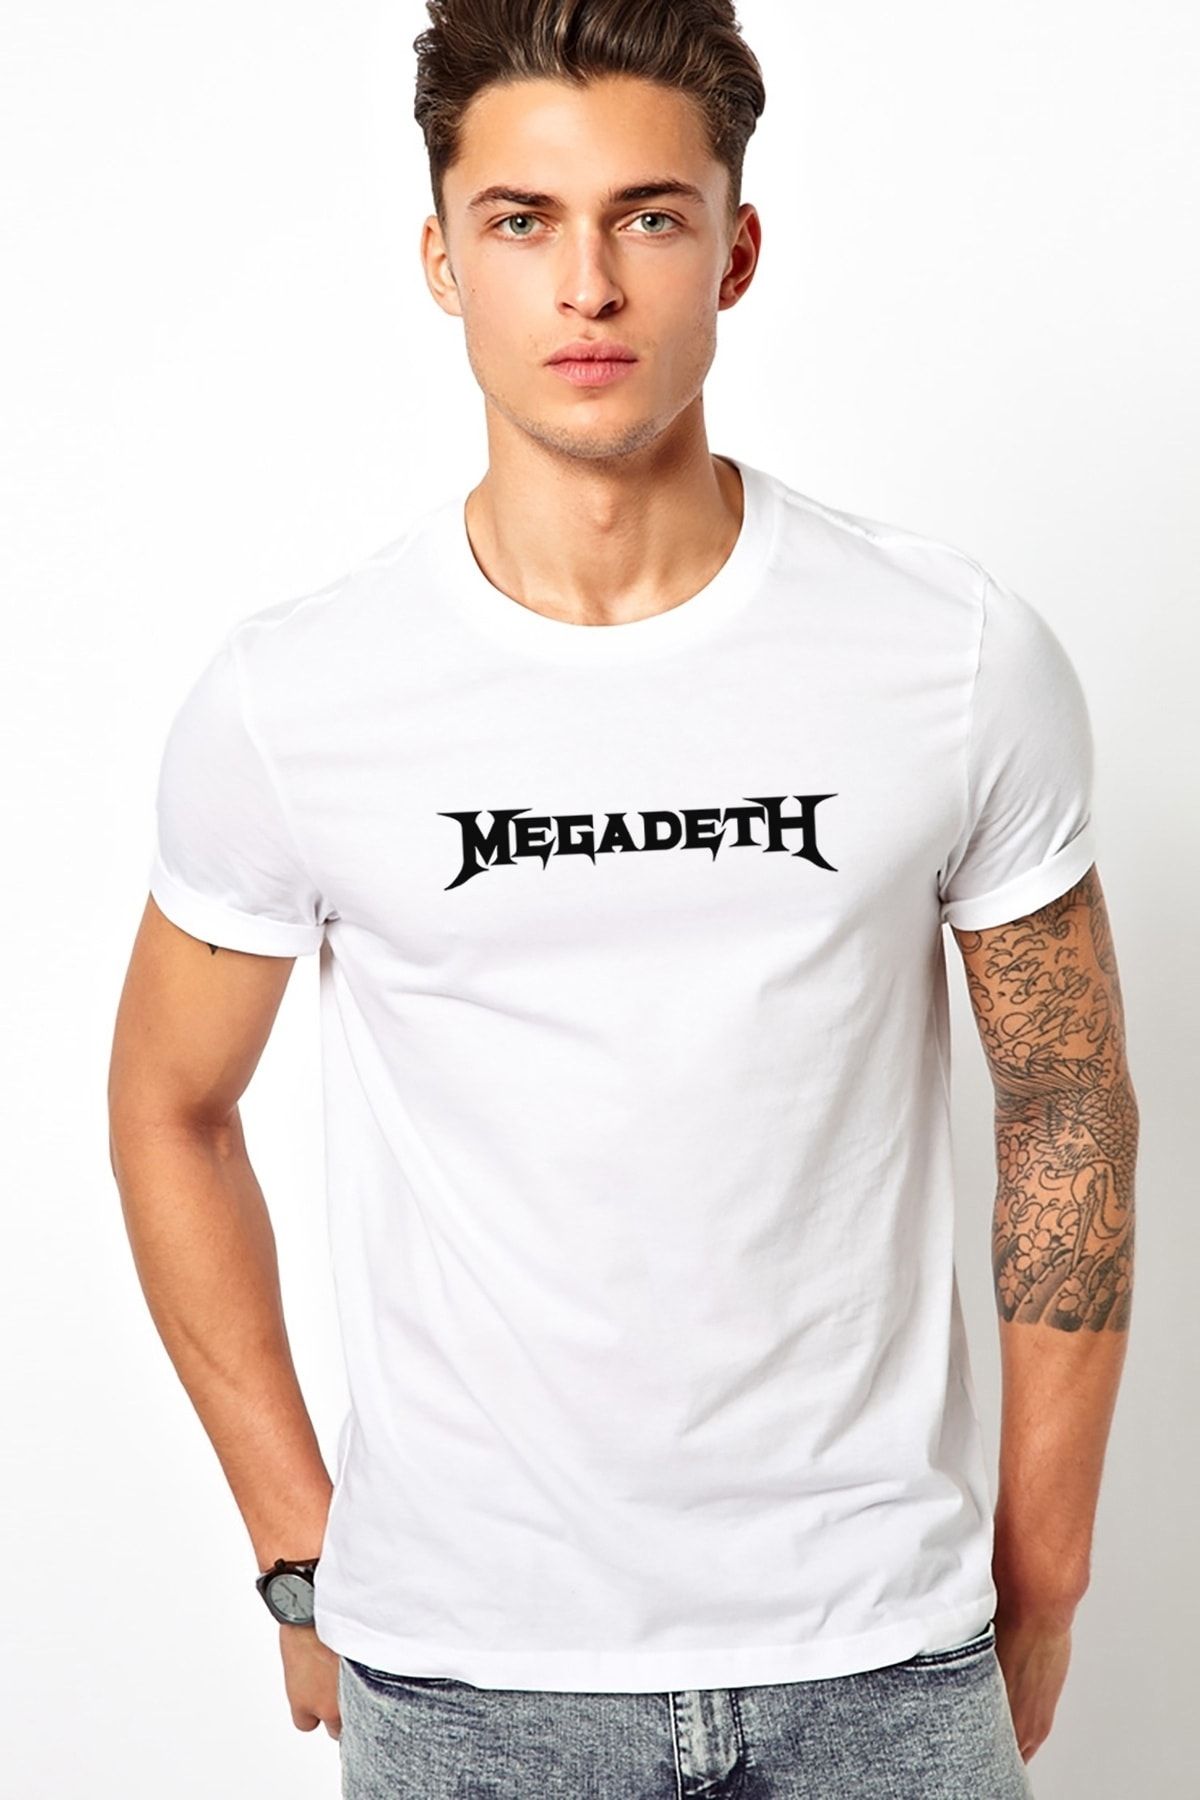 QIVI Red Dead Redemption 2 Logo Baskılı Beyaz Erkek Örme Tshirt T-shirt Tişört T Shirt